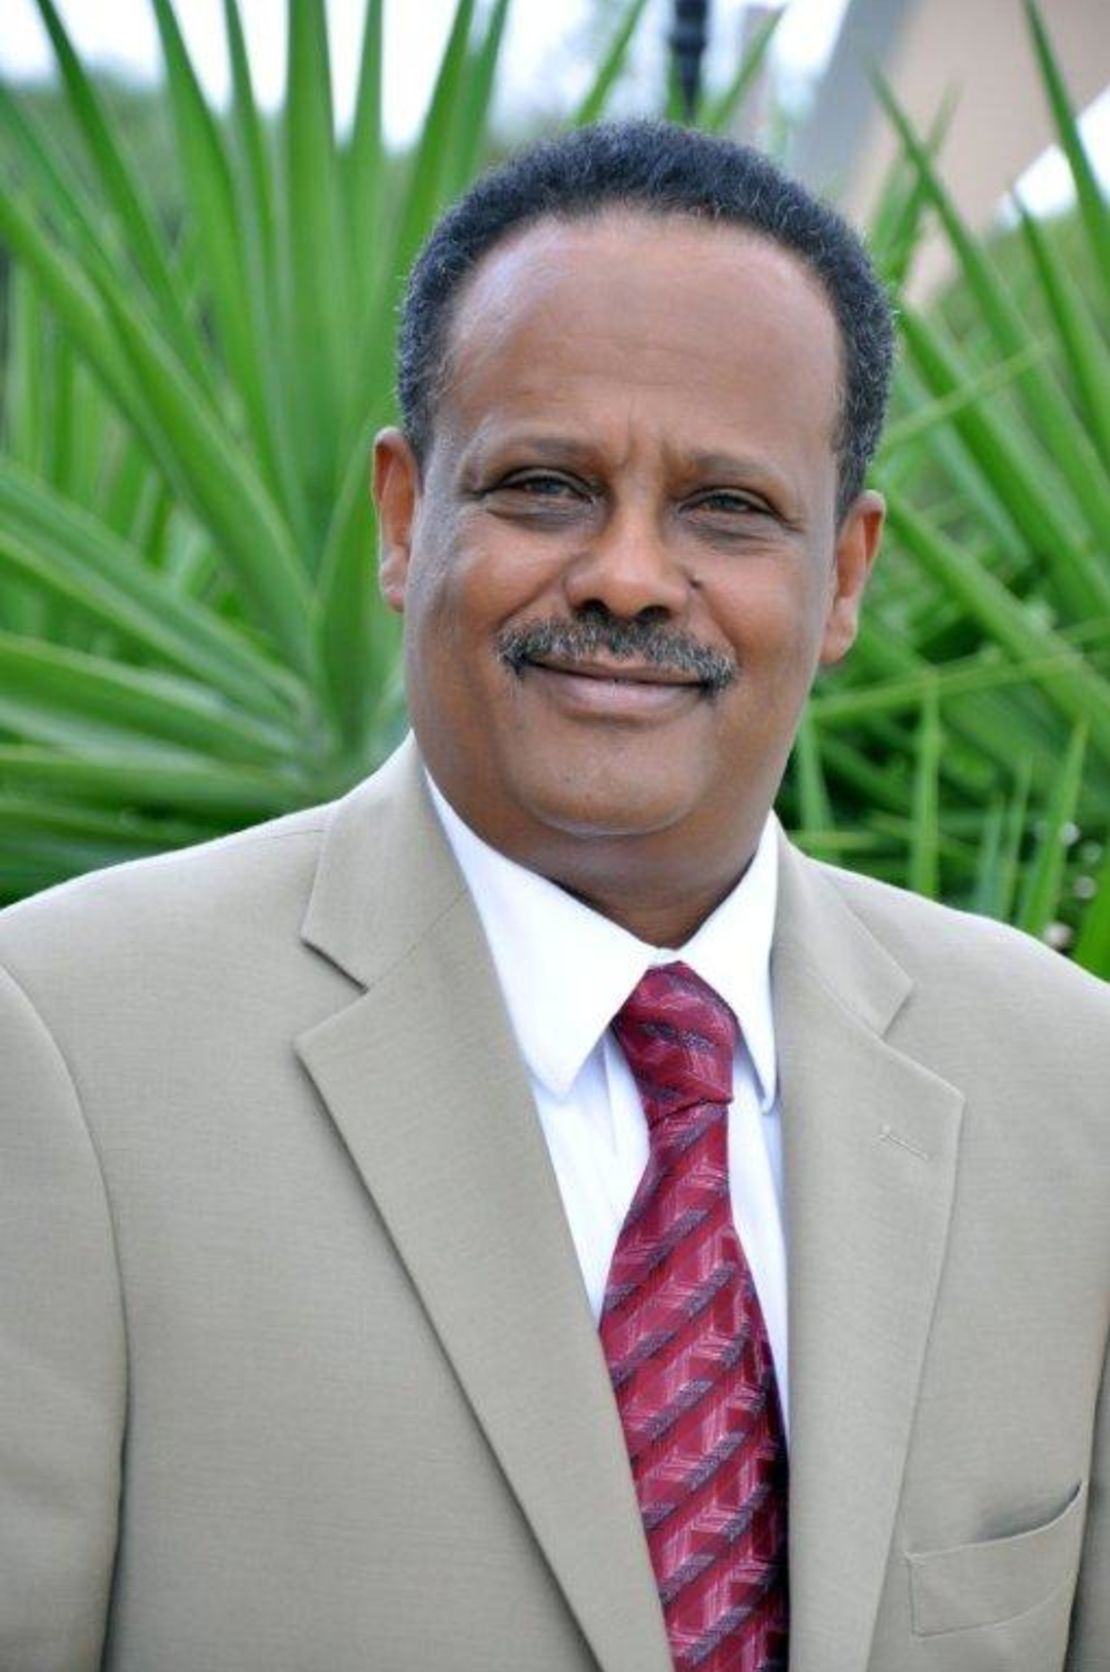 Tewodros Melesse